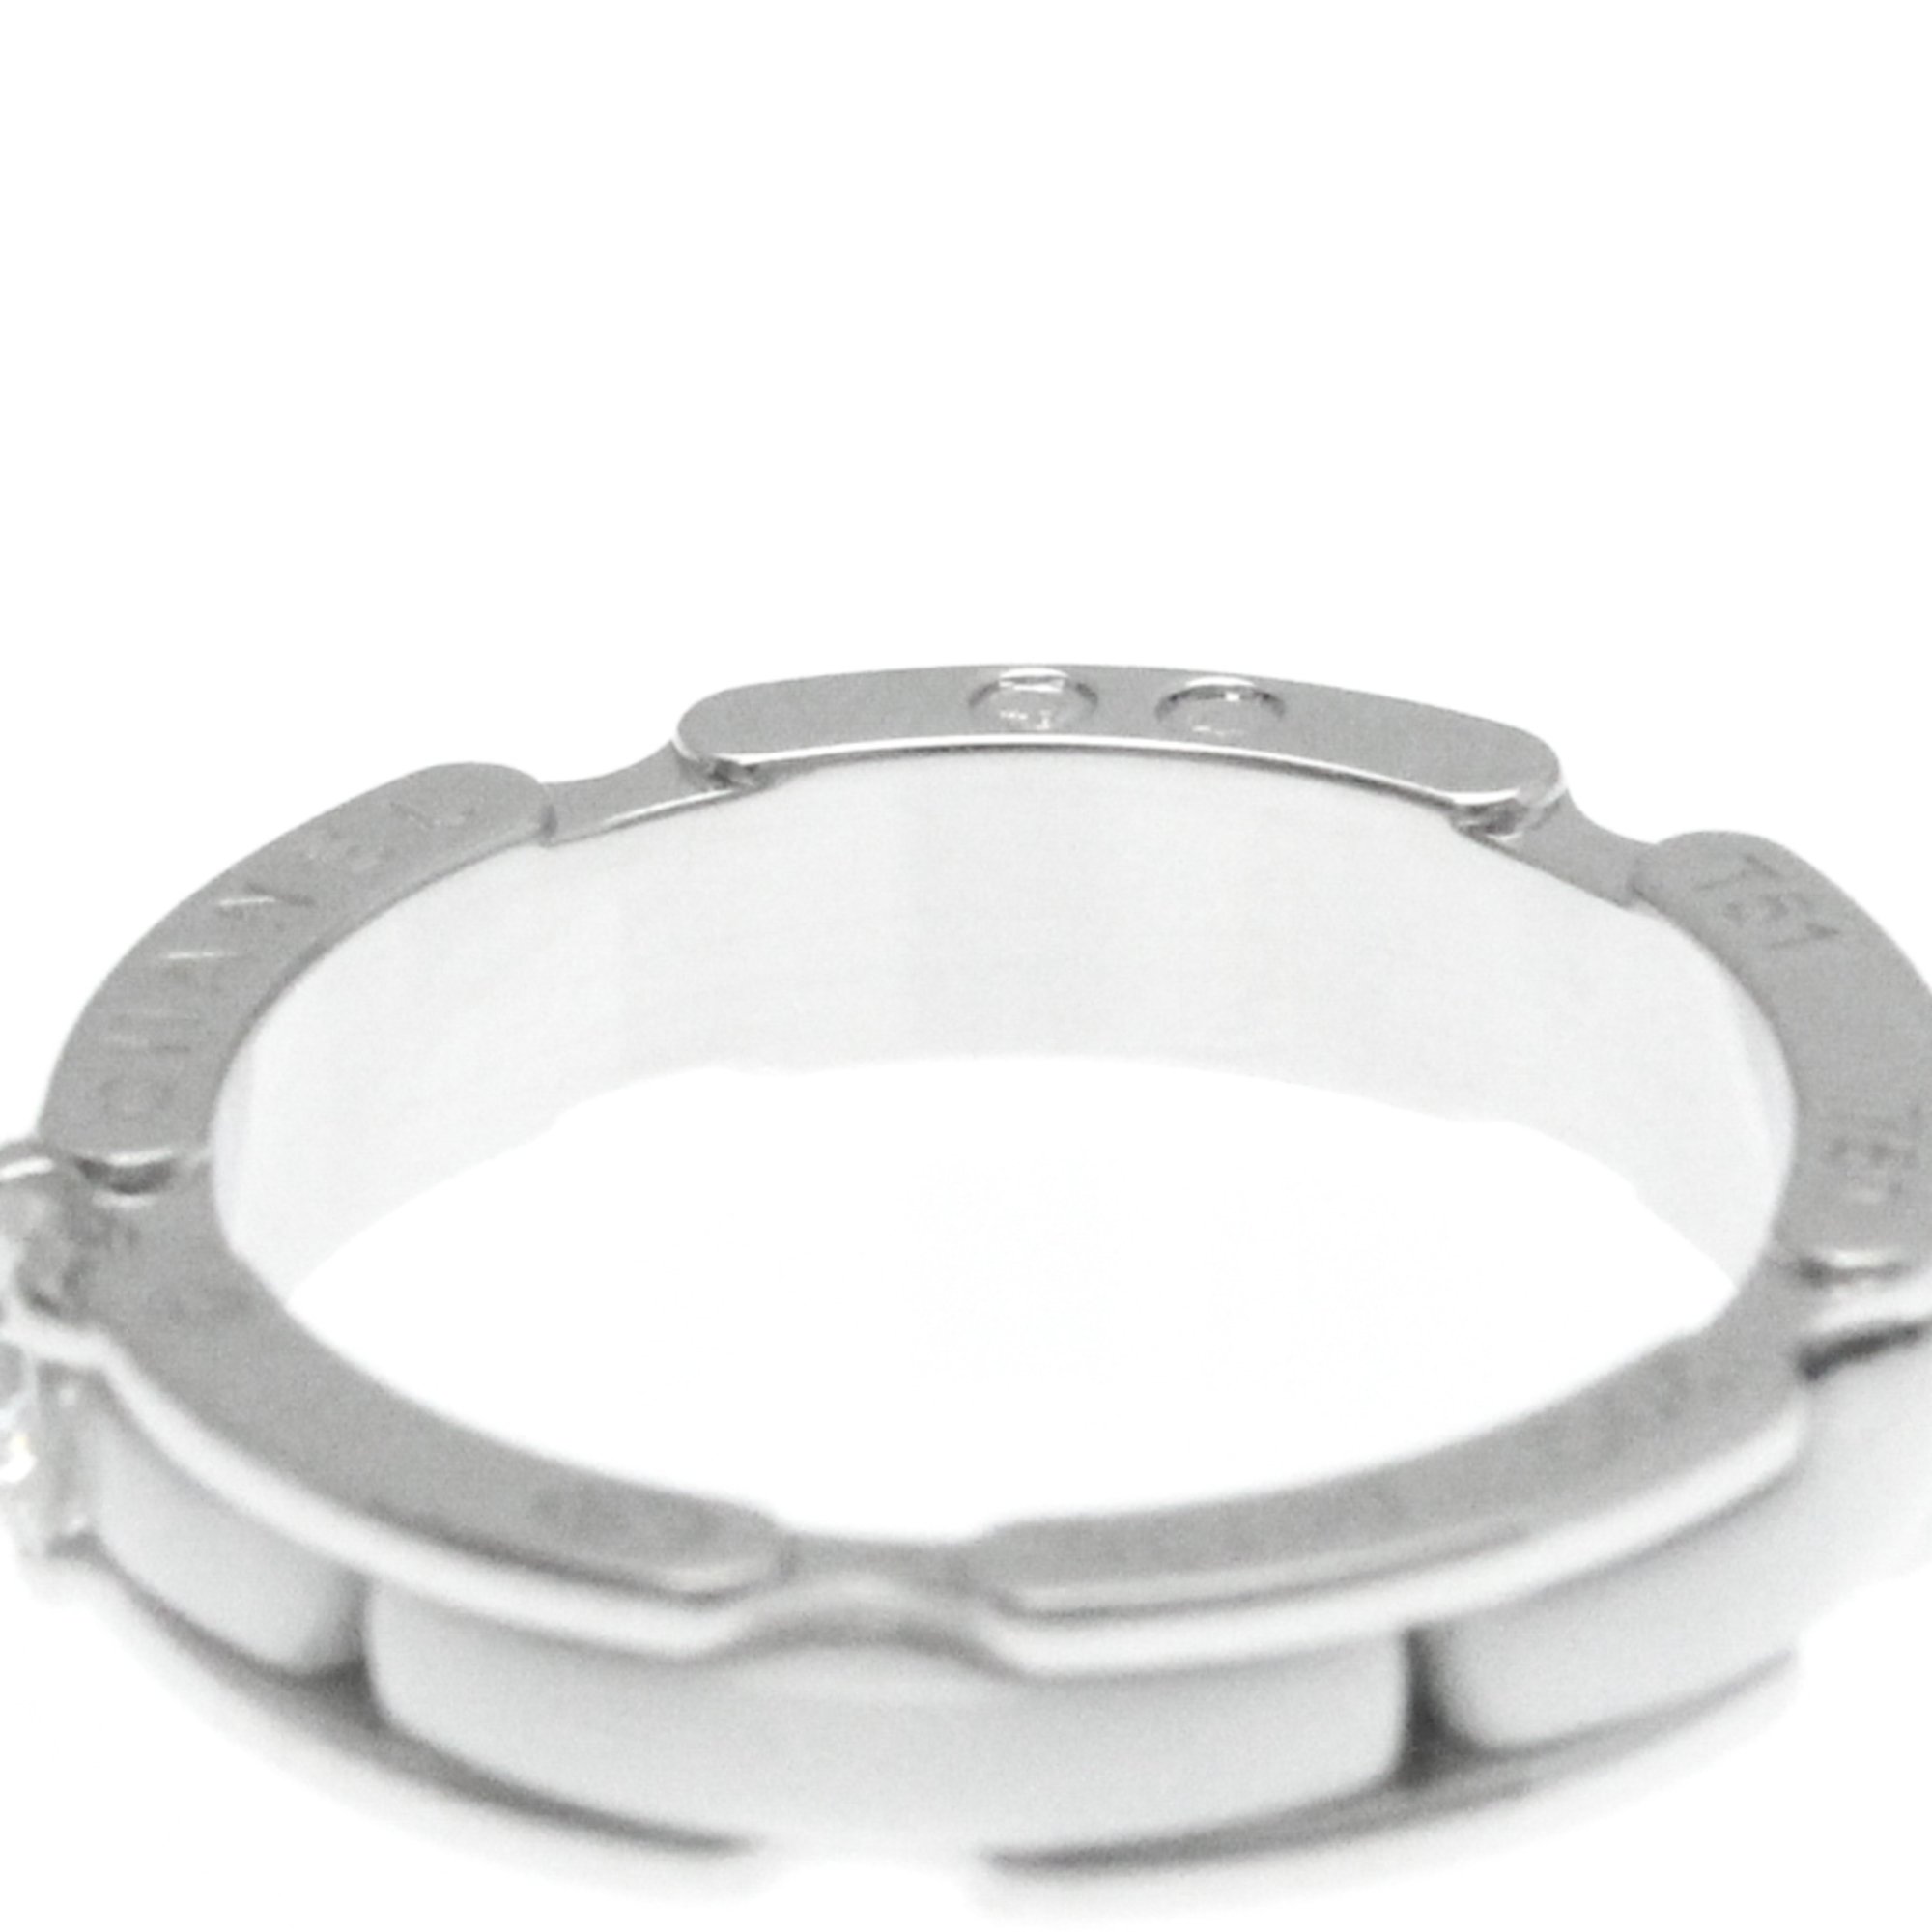 Chanel Ultra Collection 1P Diamond Ring Small Size Ceramic,White Gold (18K) Fashion Diamond Band Ring Silver,White